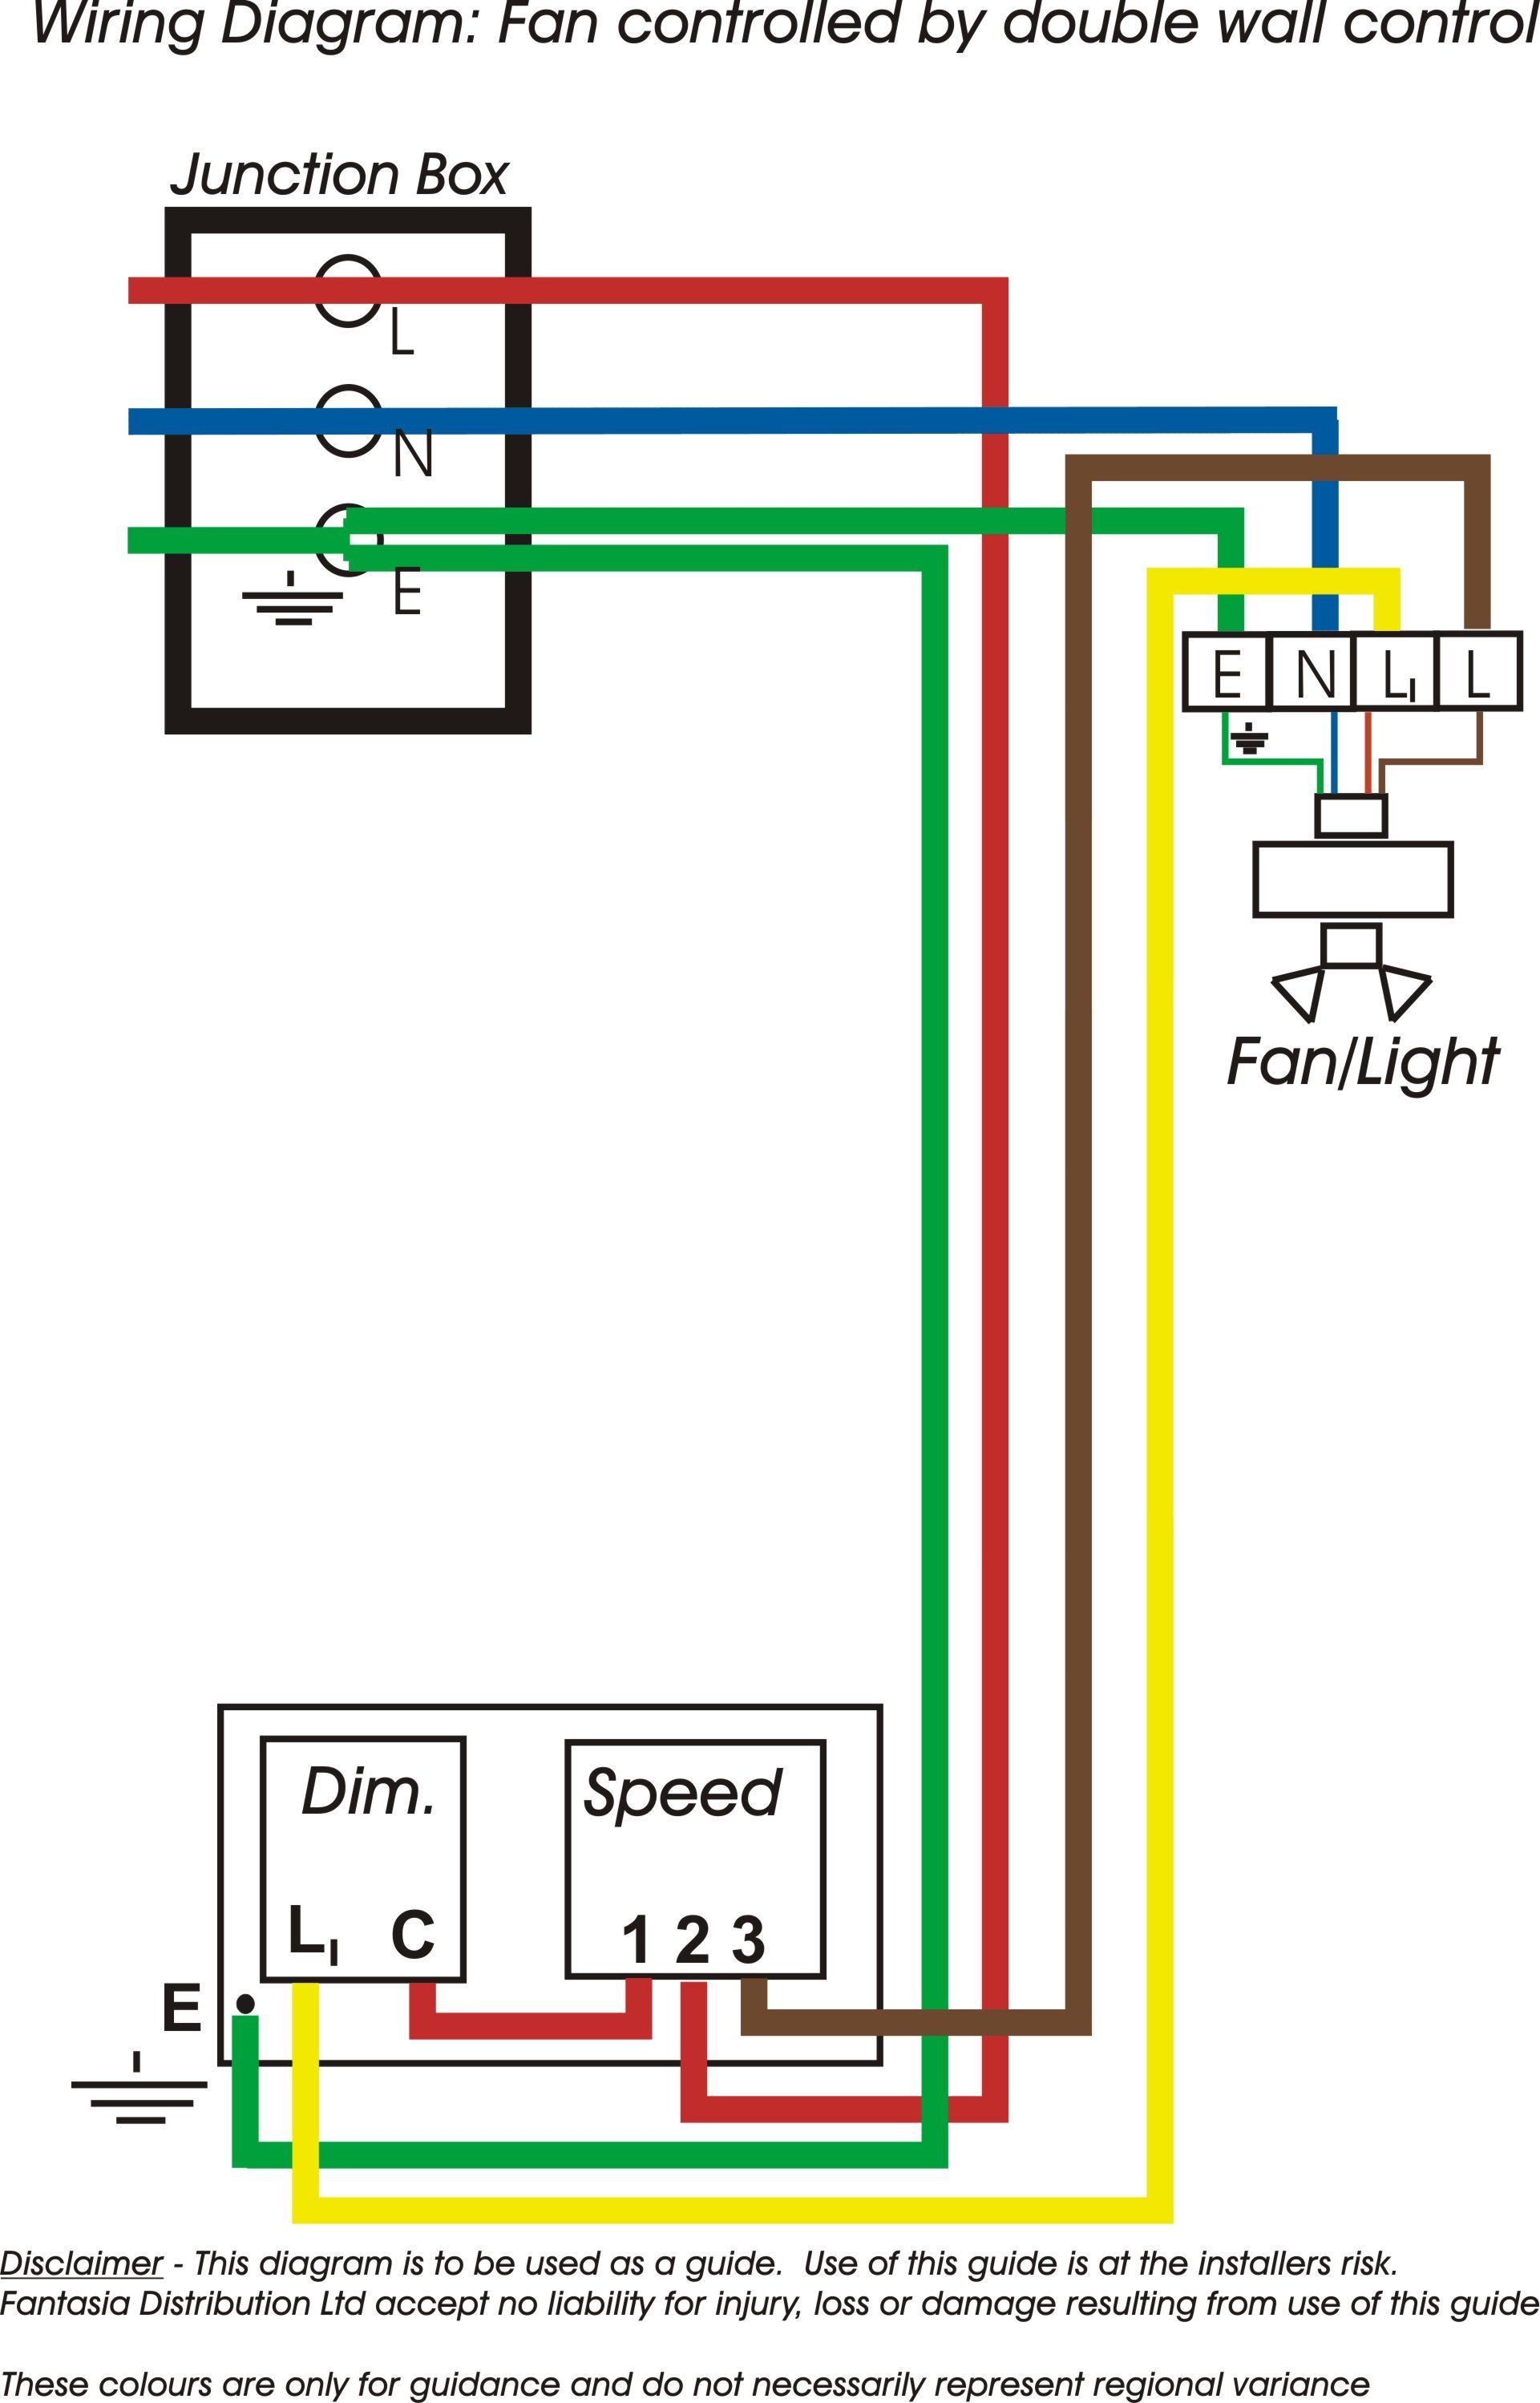 casablanca w-11 wiring diagram